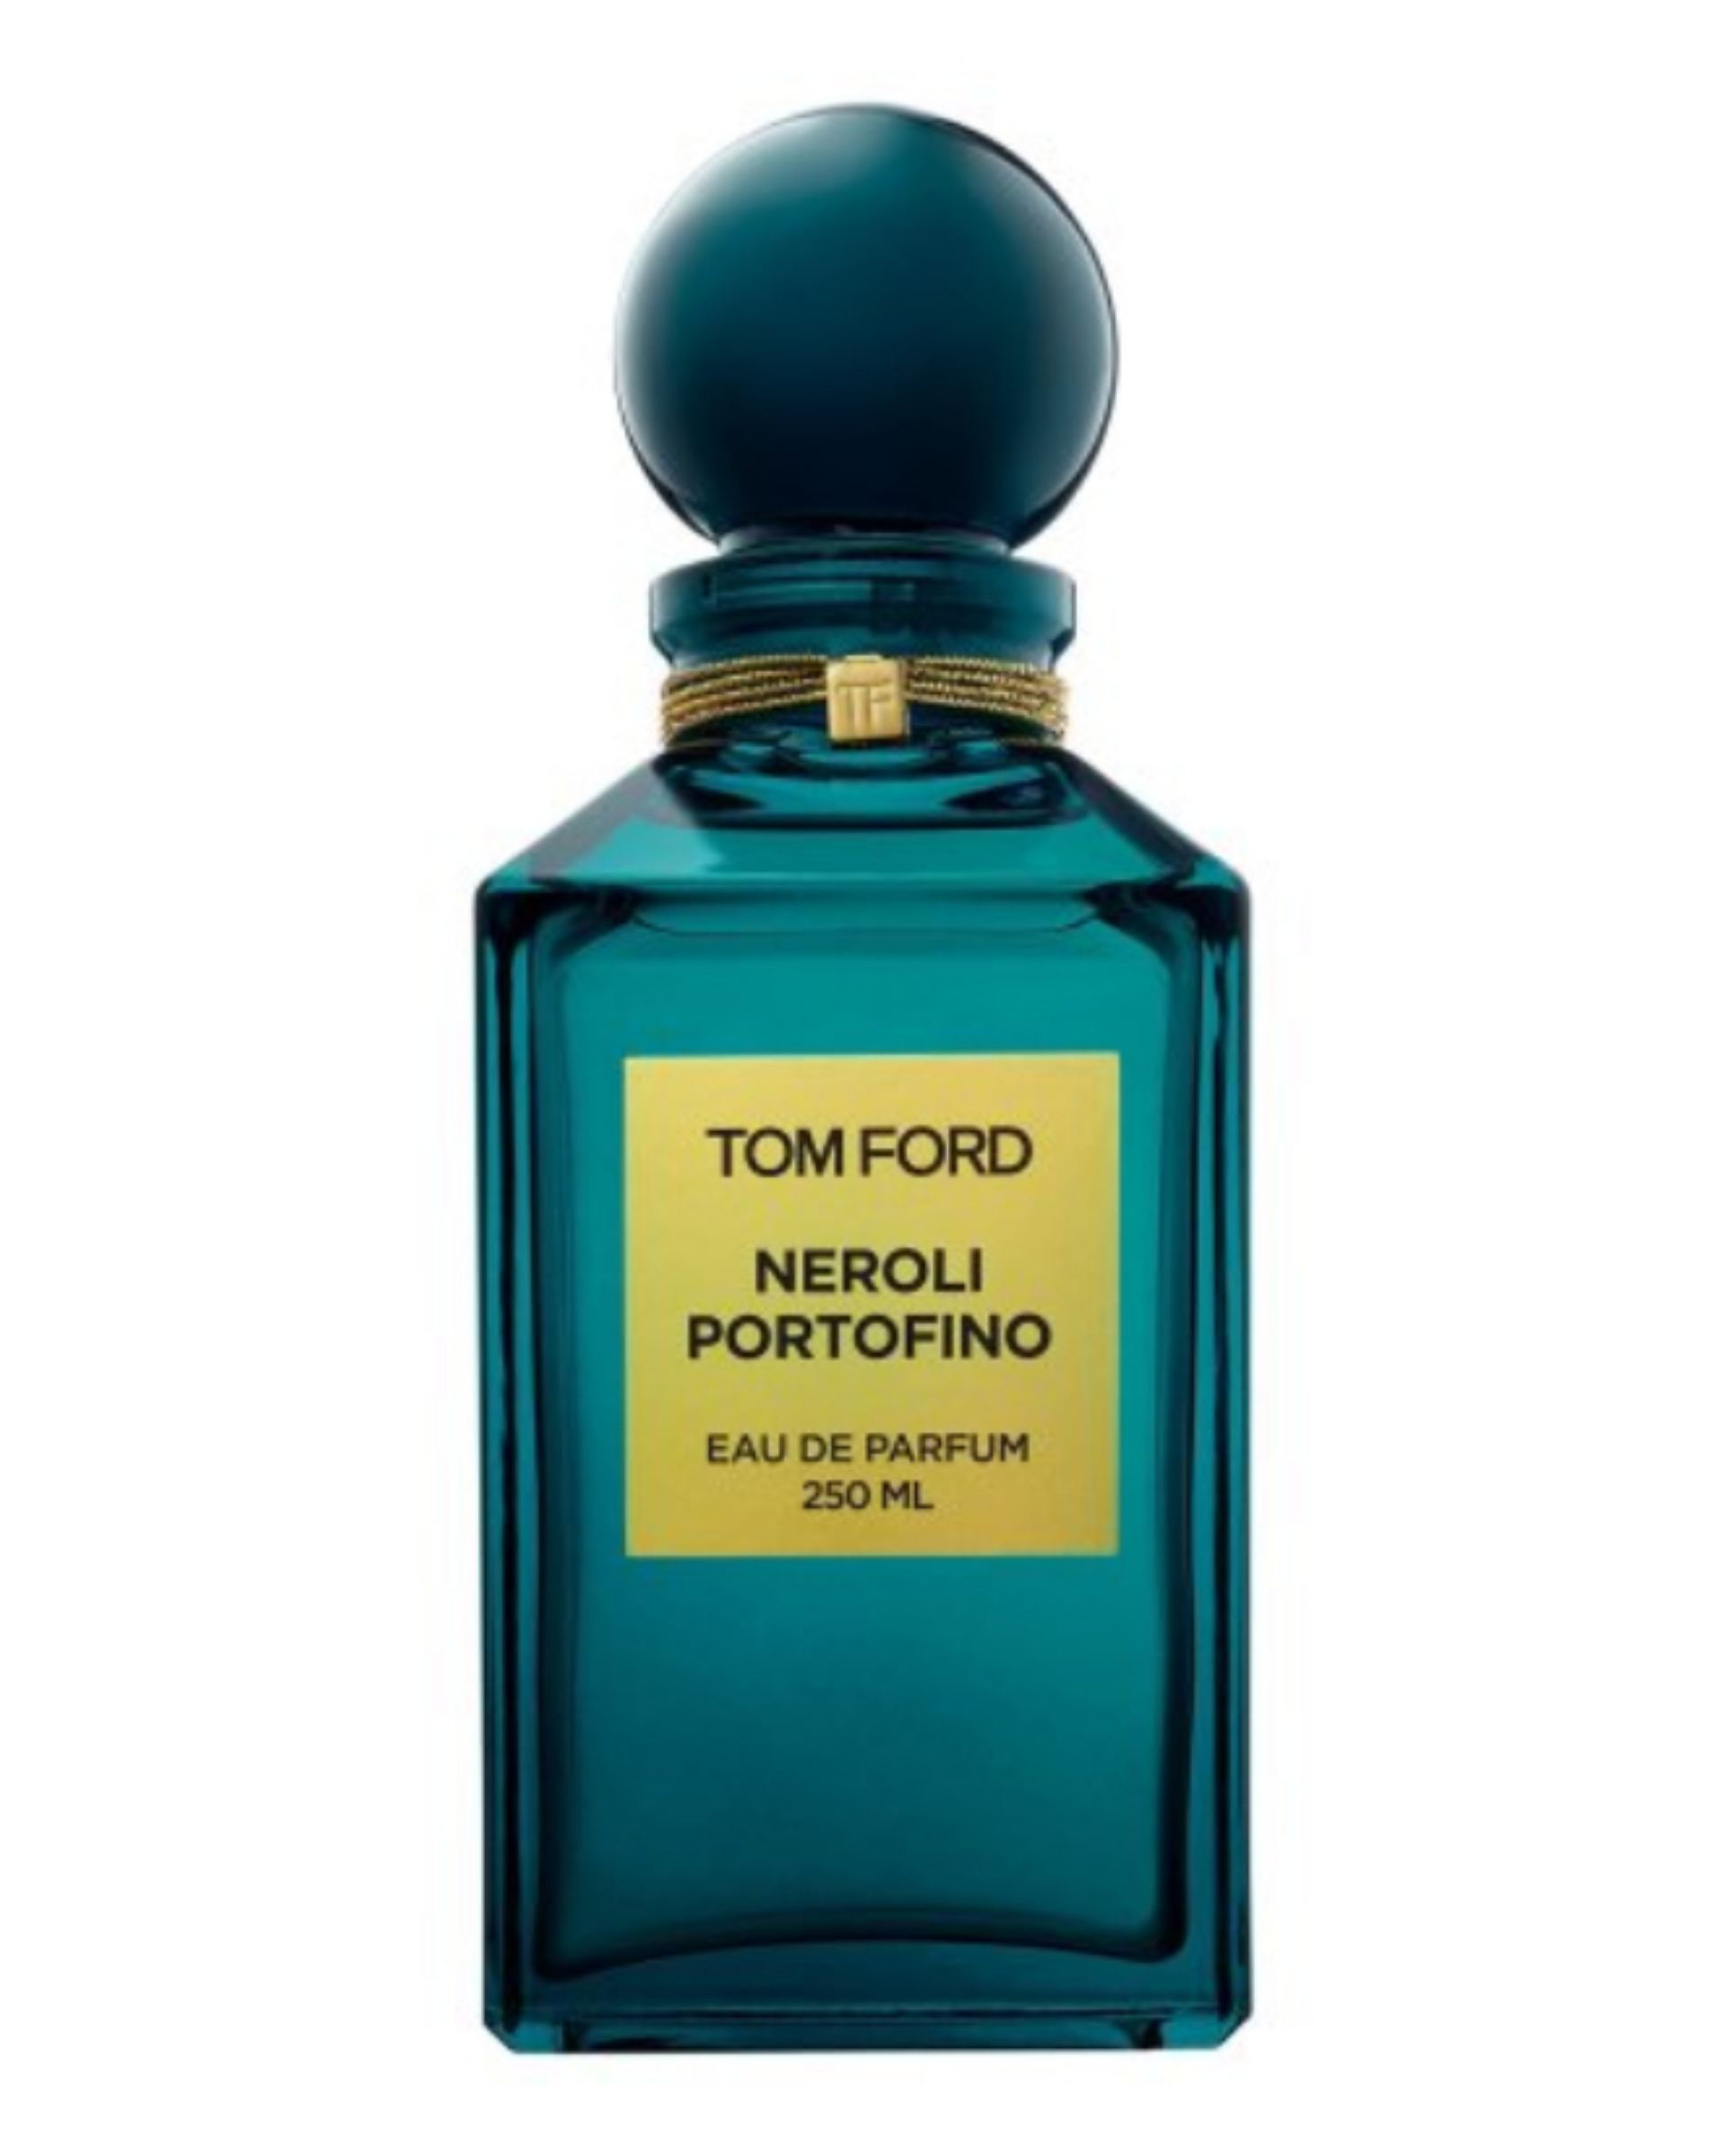 TOM FORD Neroli Portofino type Perfume Oil